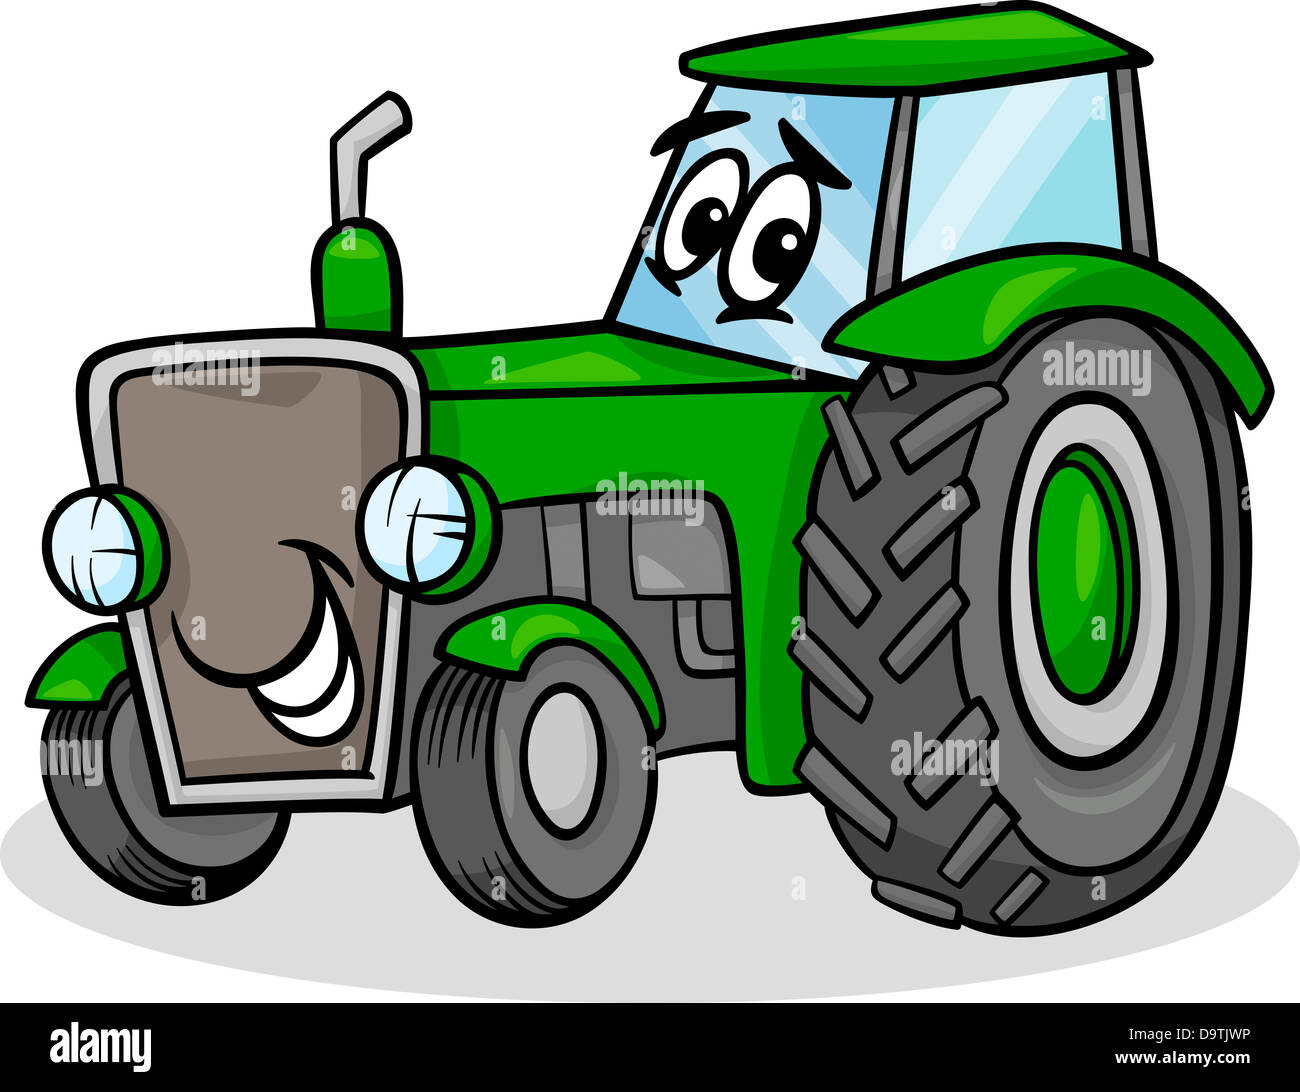 Cartoon-Illustration der Funny Farm Traktor Fahrzeug Comic-Maskottchen